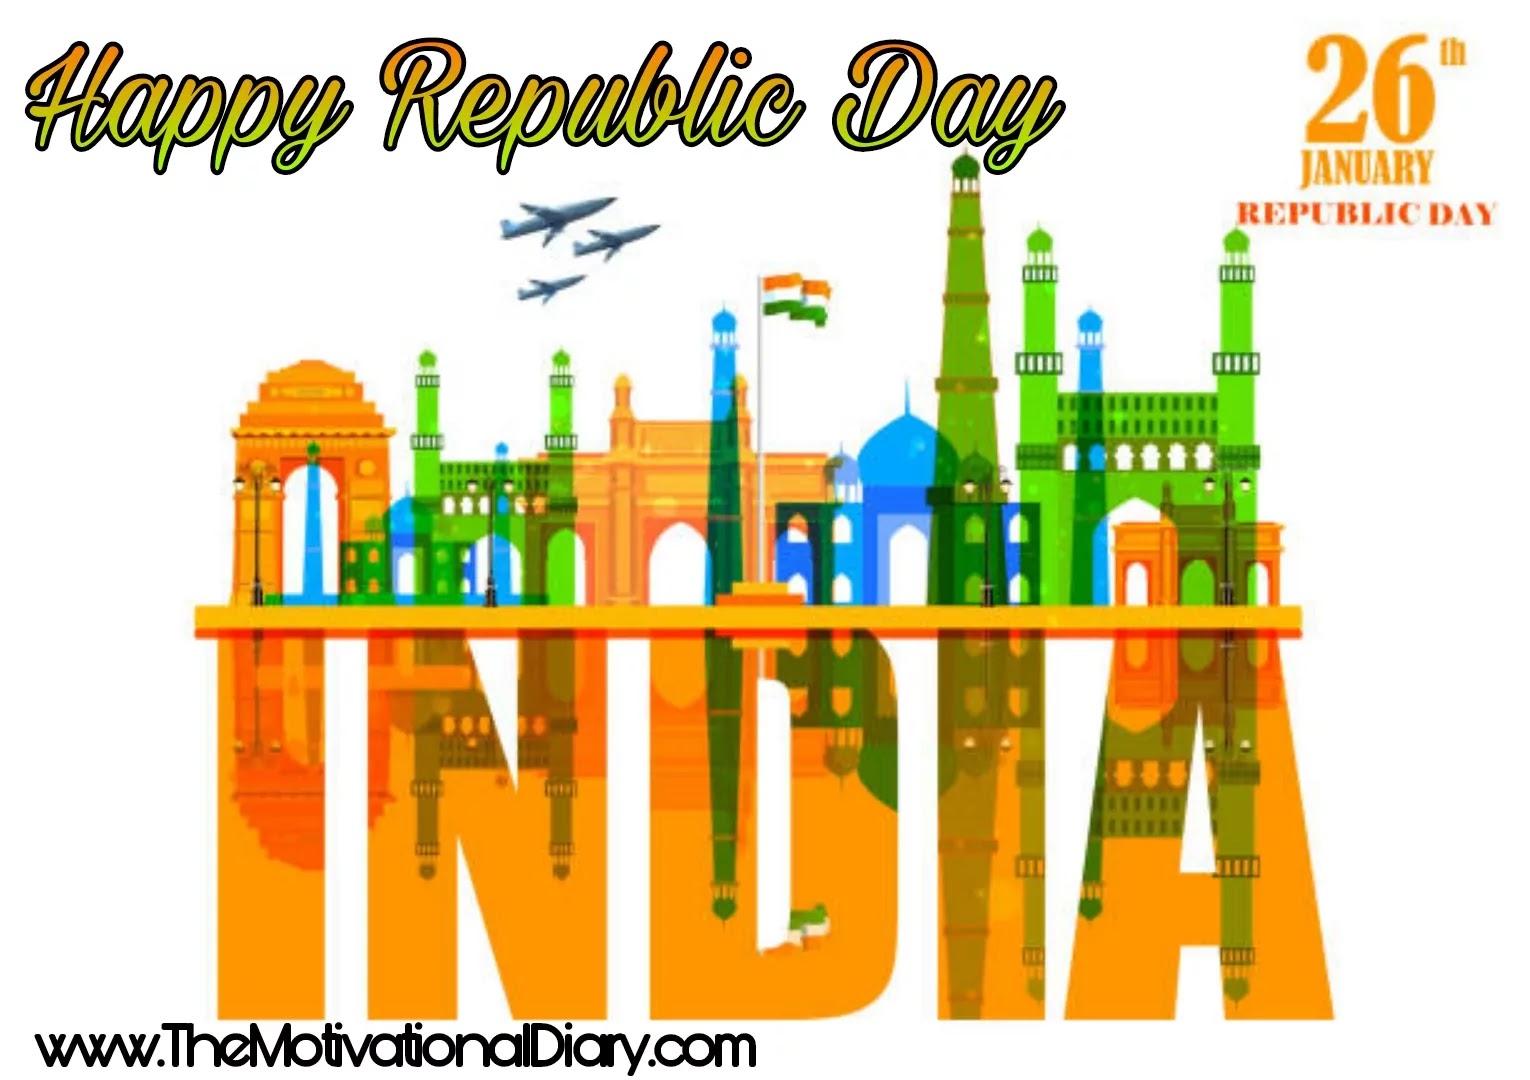 republic-day-india-images-pics-photo-2021-ram-maurya-the-motivational-diary